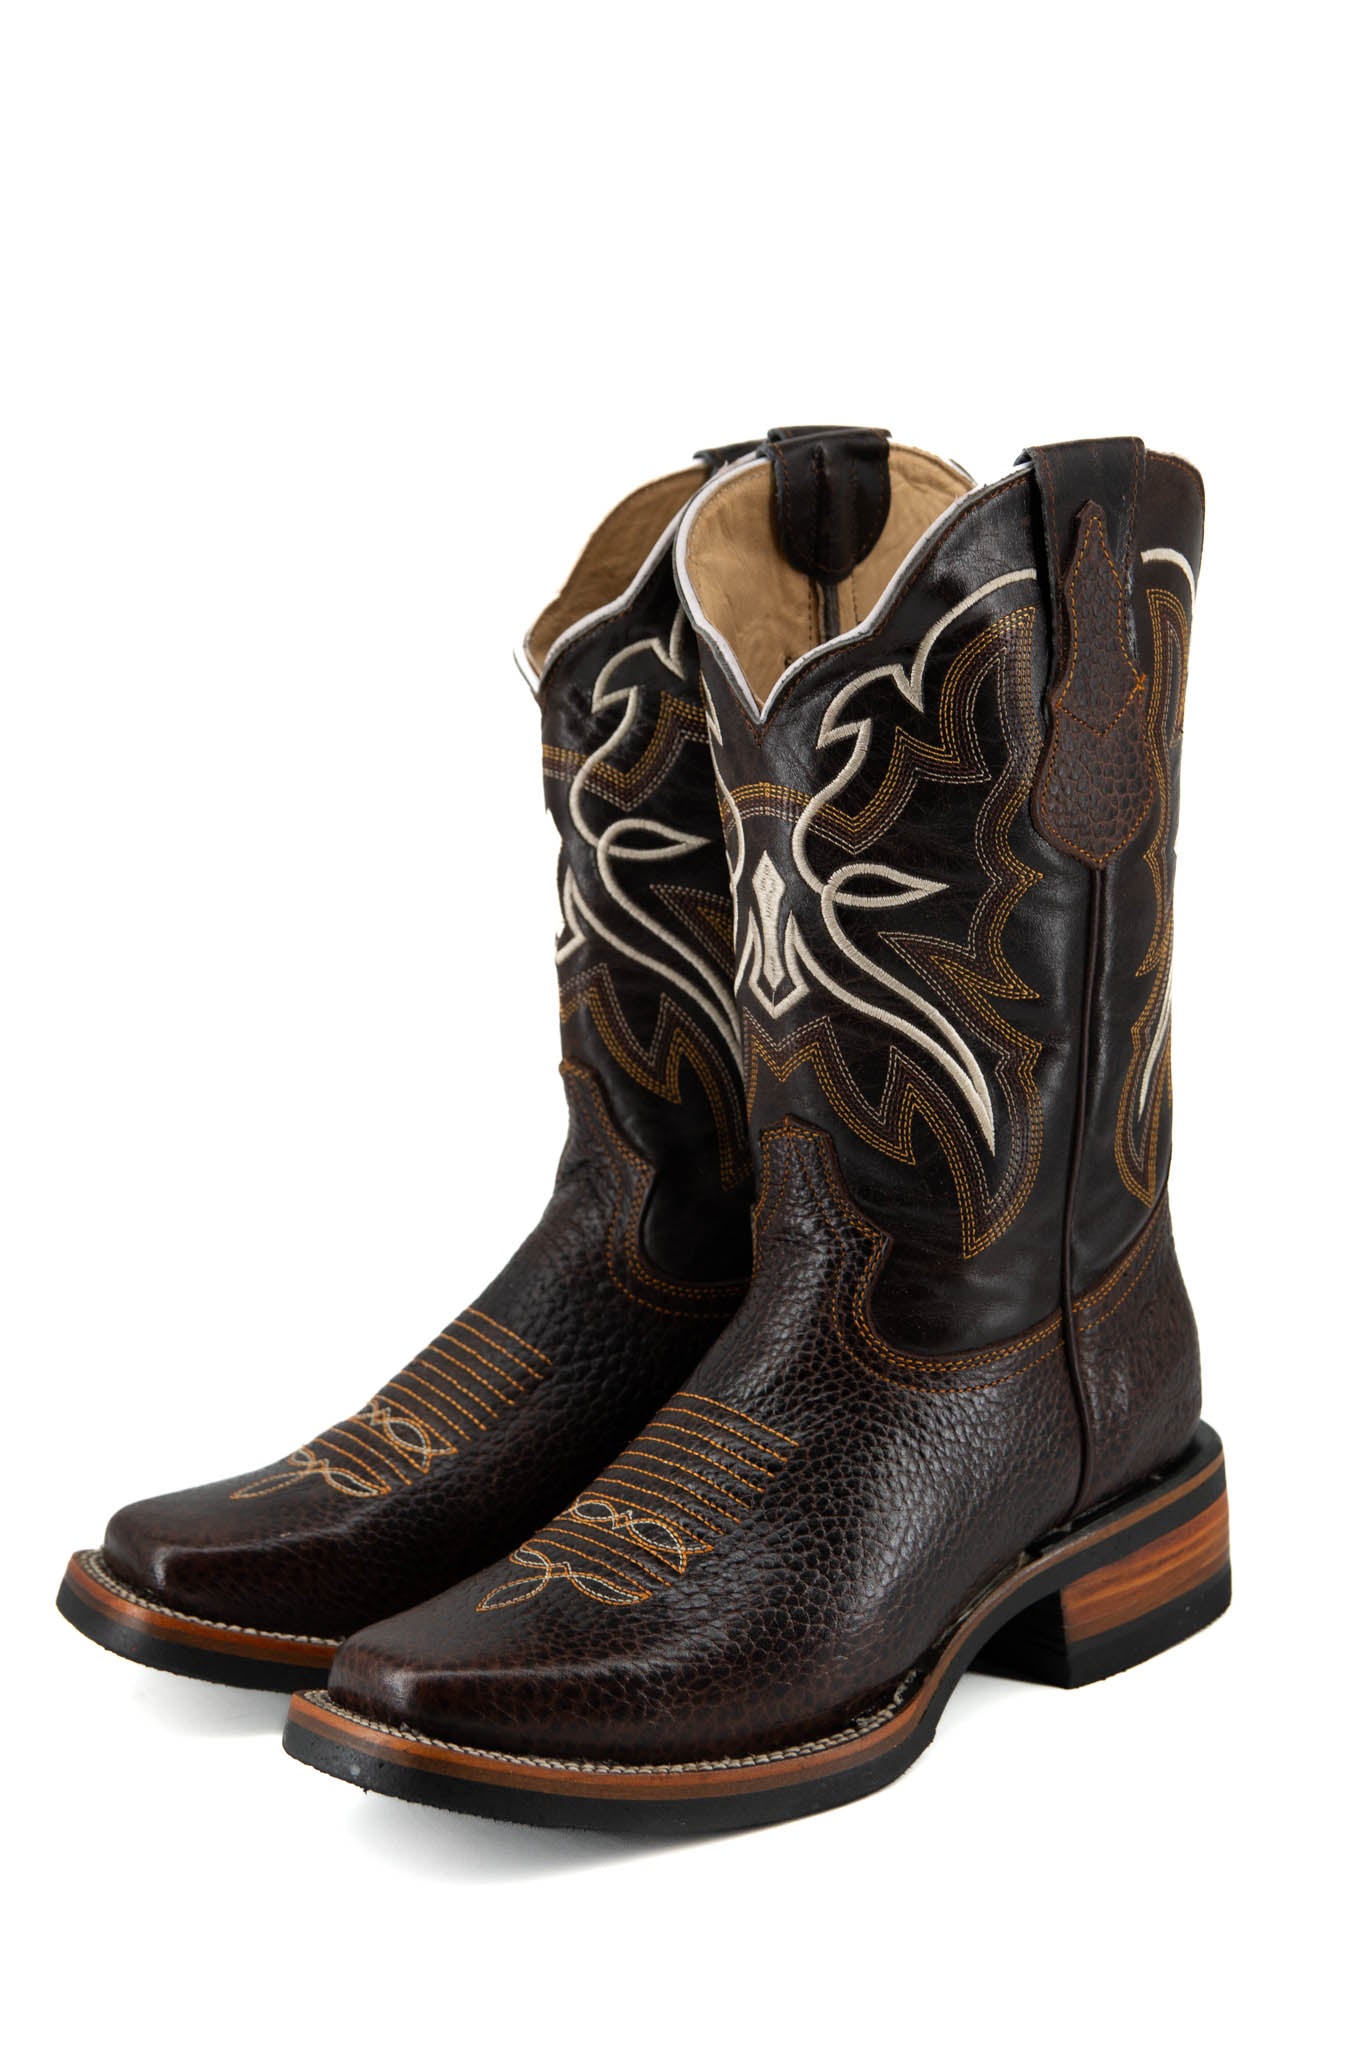 Est. 250 Lava Todo Terreno Cowboy Boot